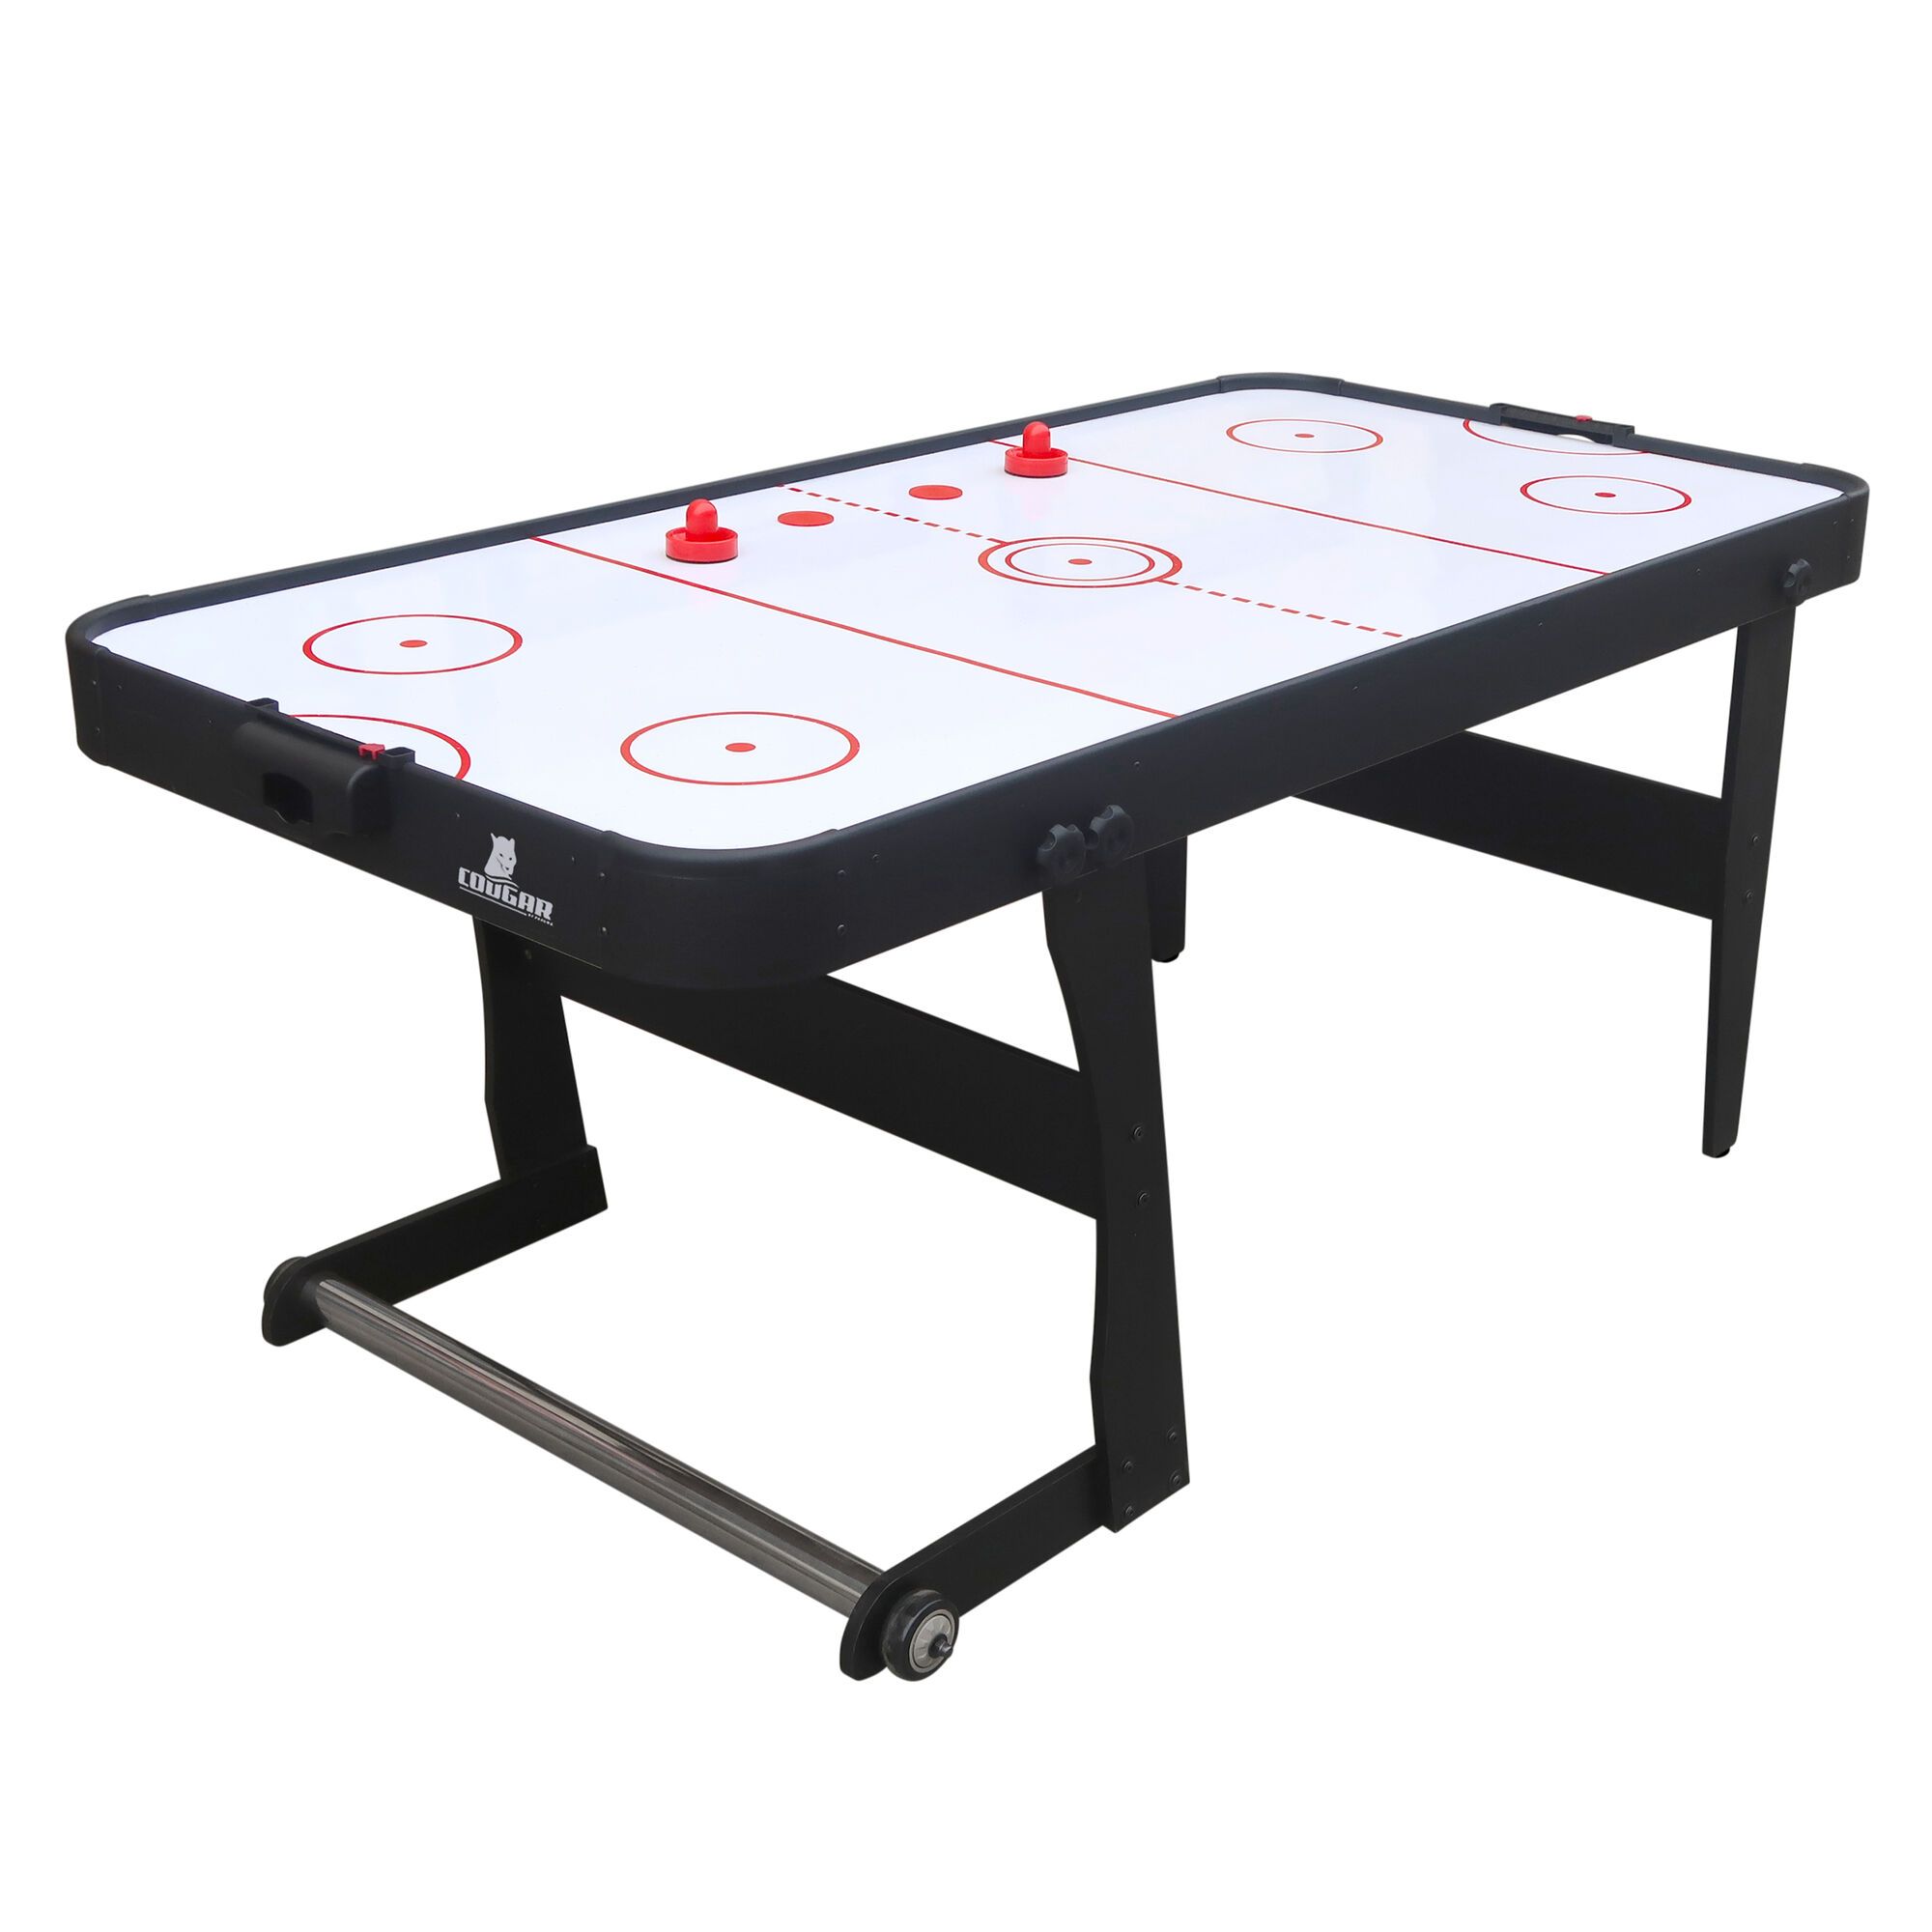 Icing XL opklapbare Airhockey tafel Zwart